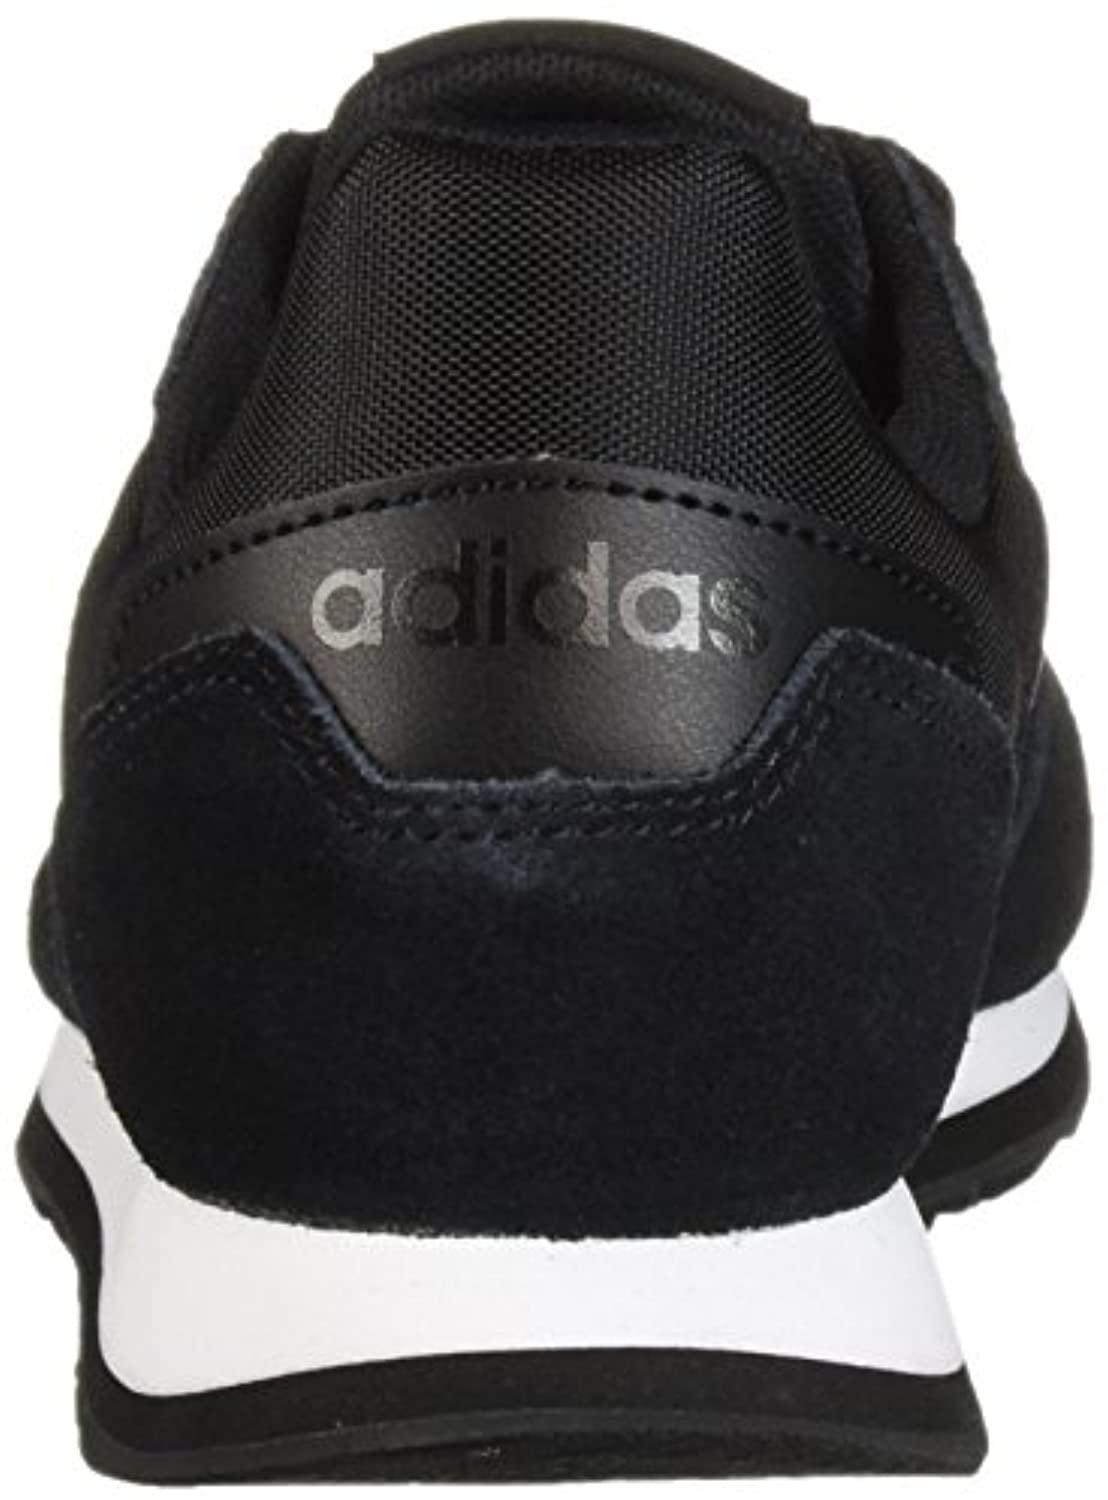 adidas originals women's 8k running shoe